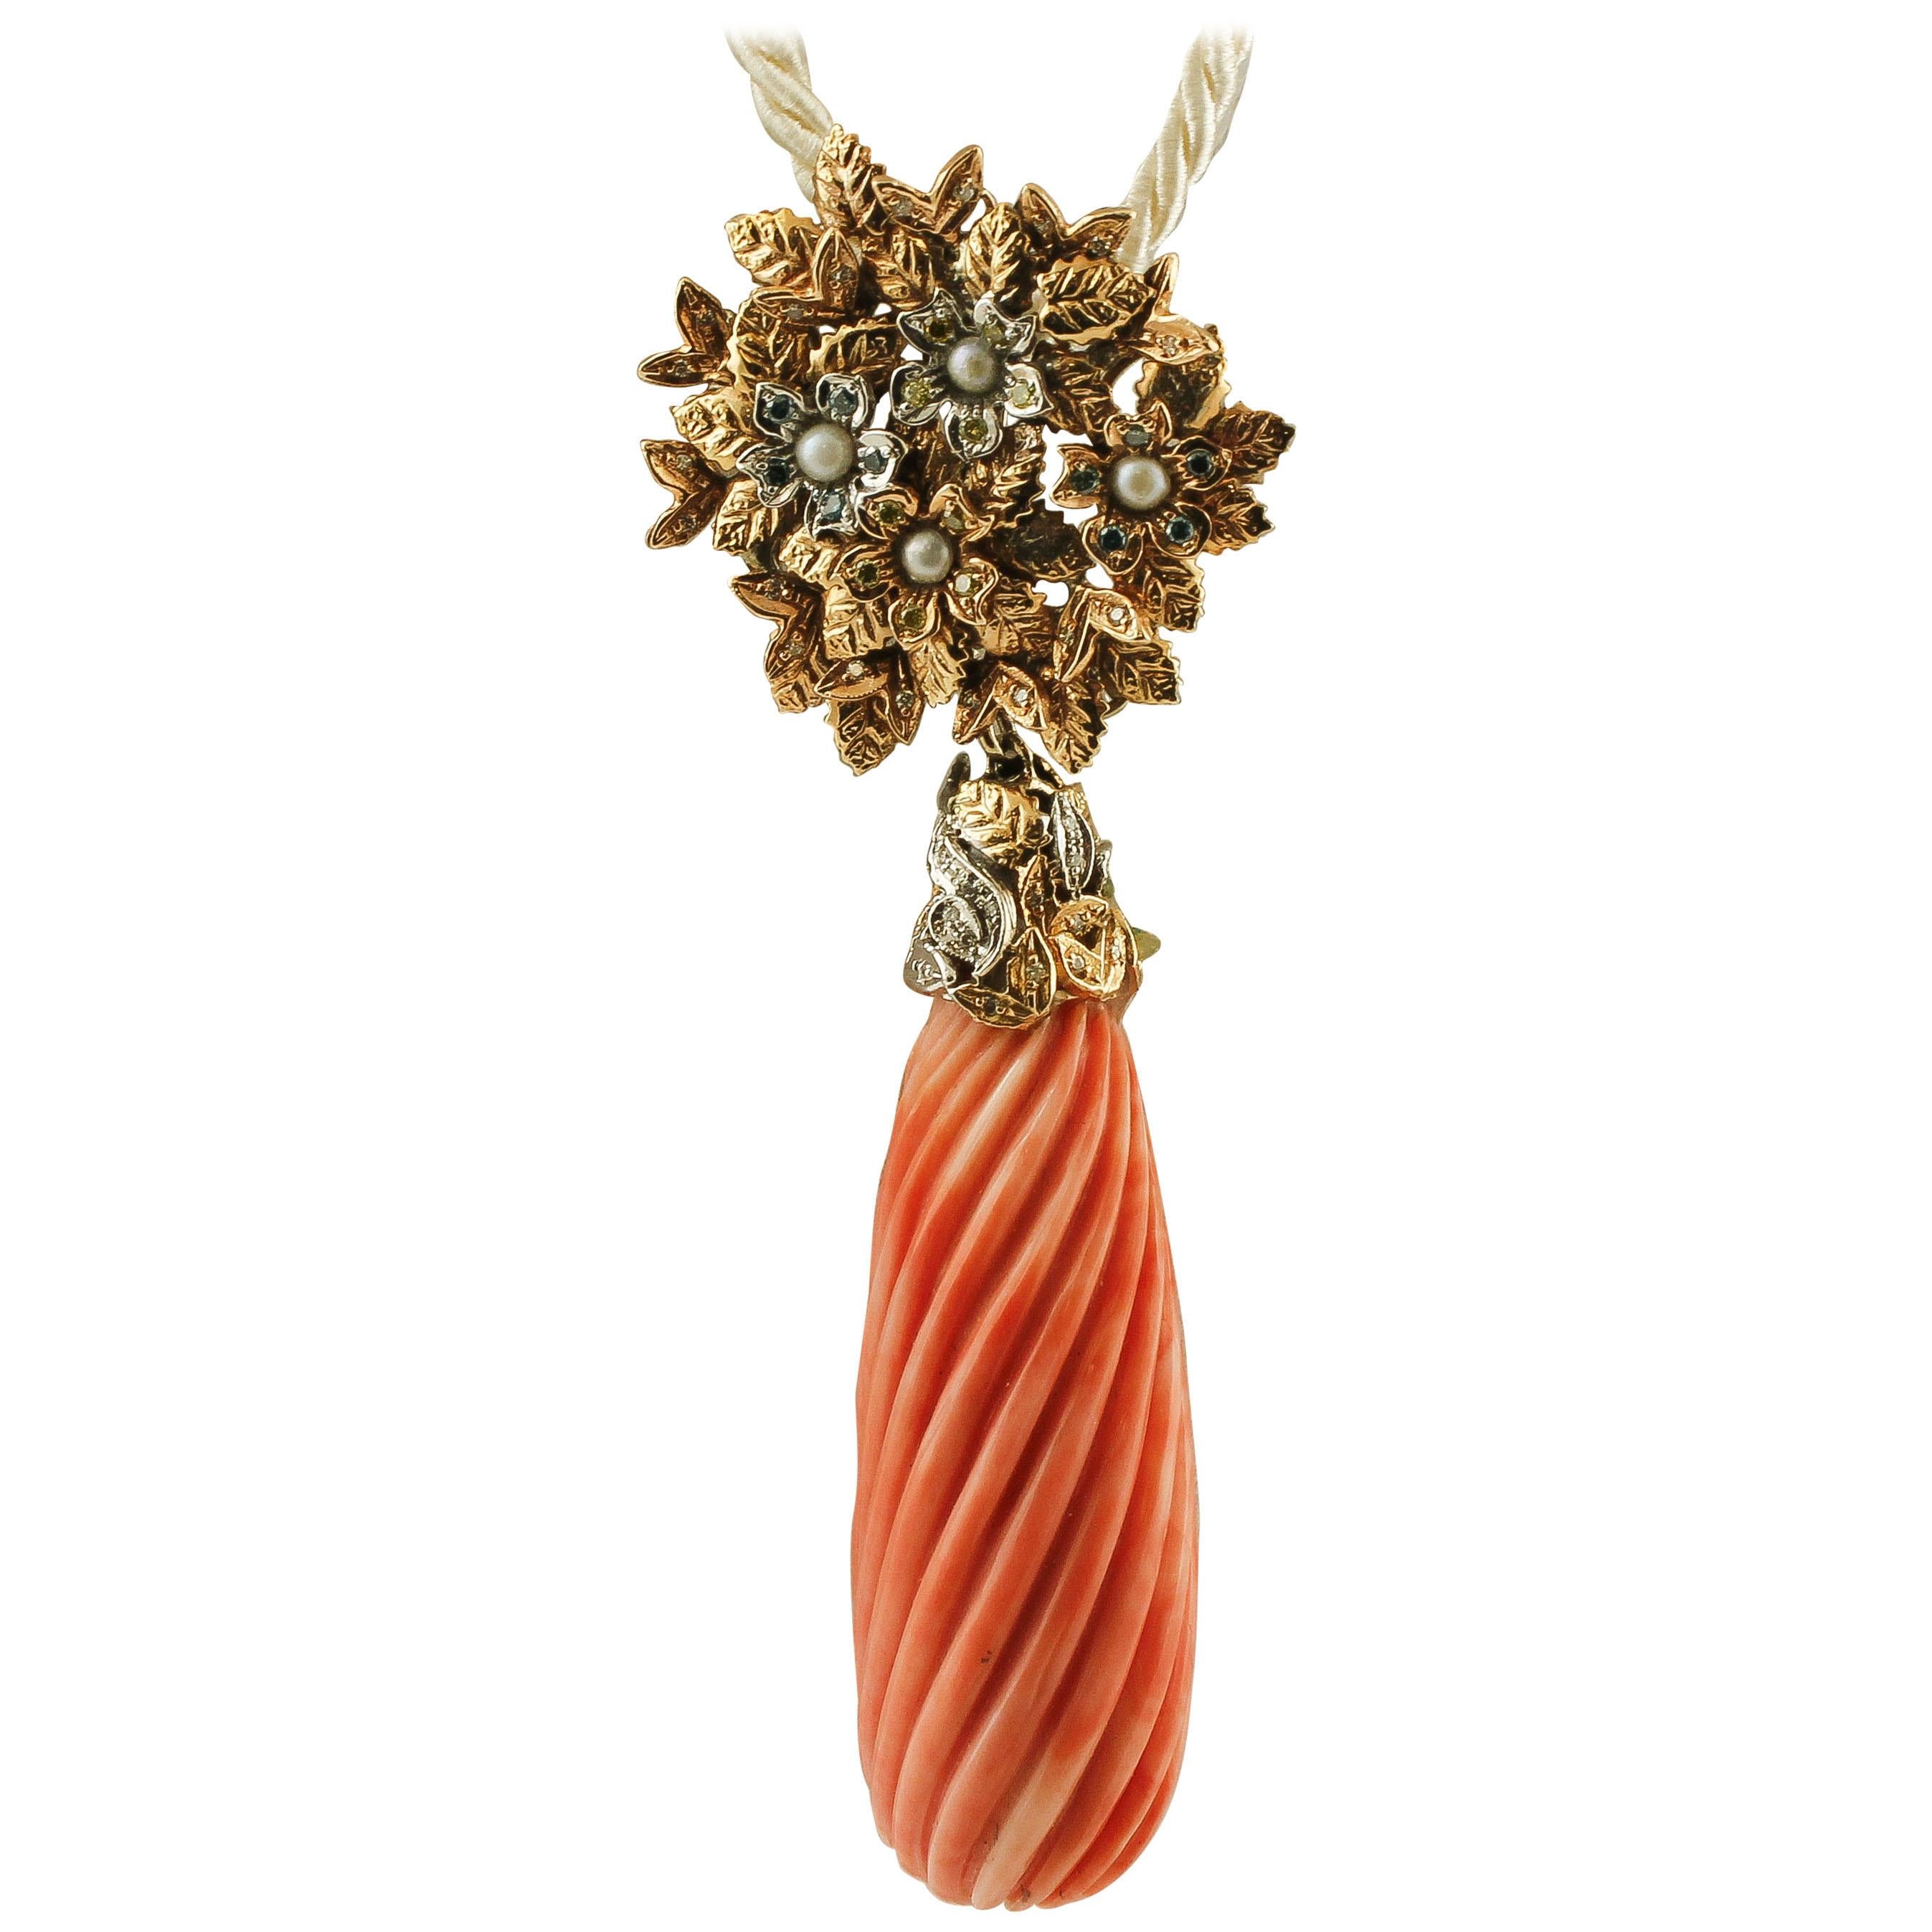 22 g Engraved Big Orange Coral, Diamonds, Pearls, 14K Yellow/White Gold Pendant